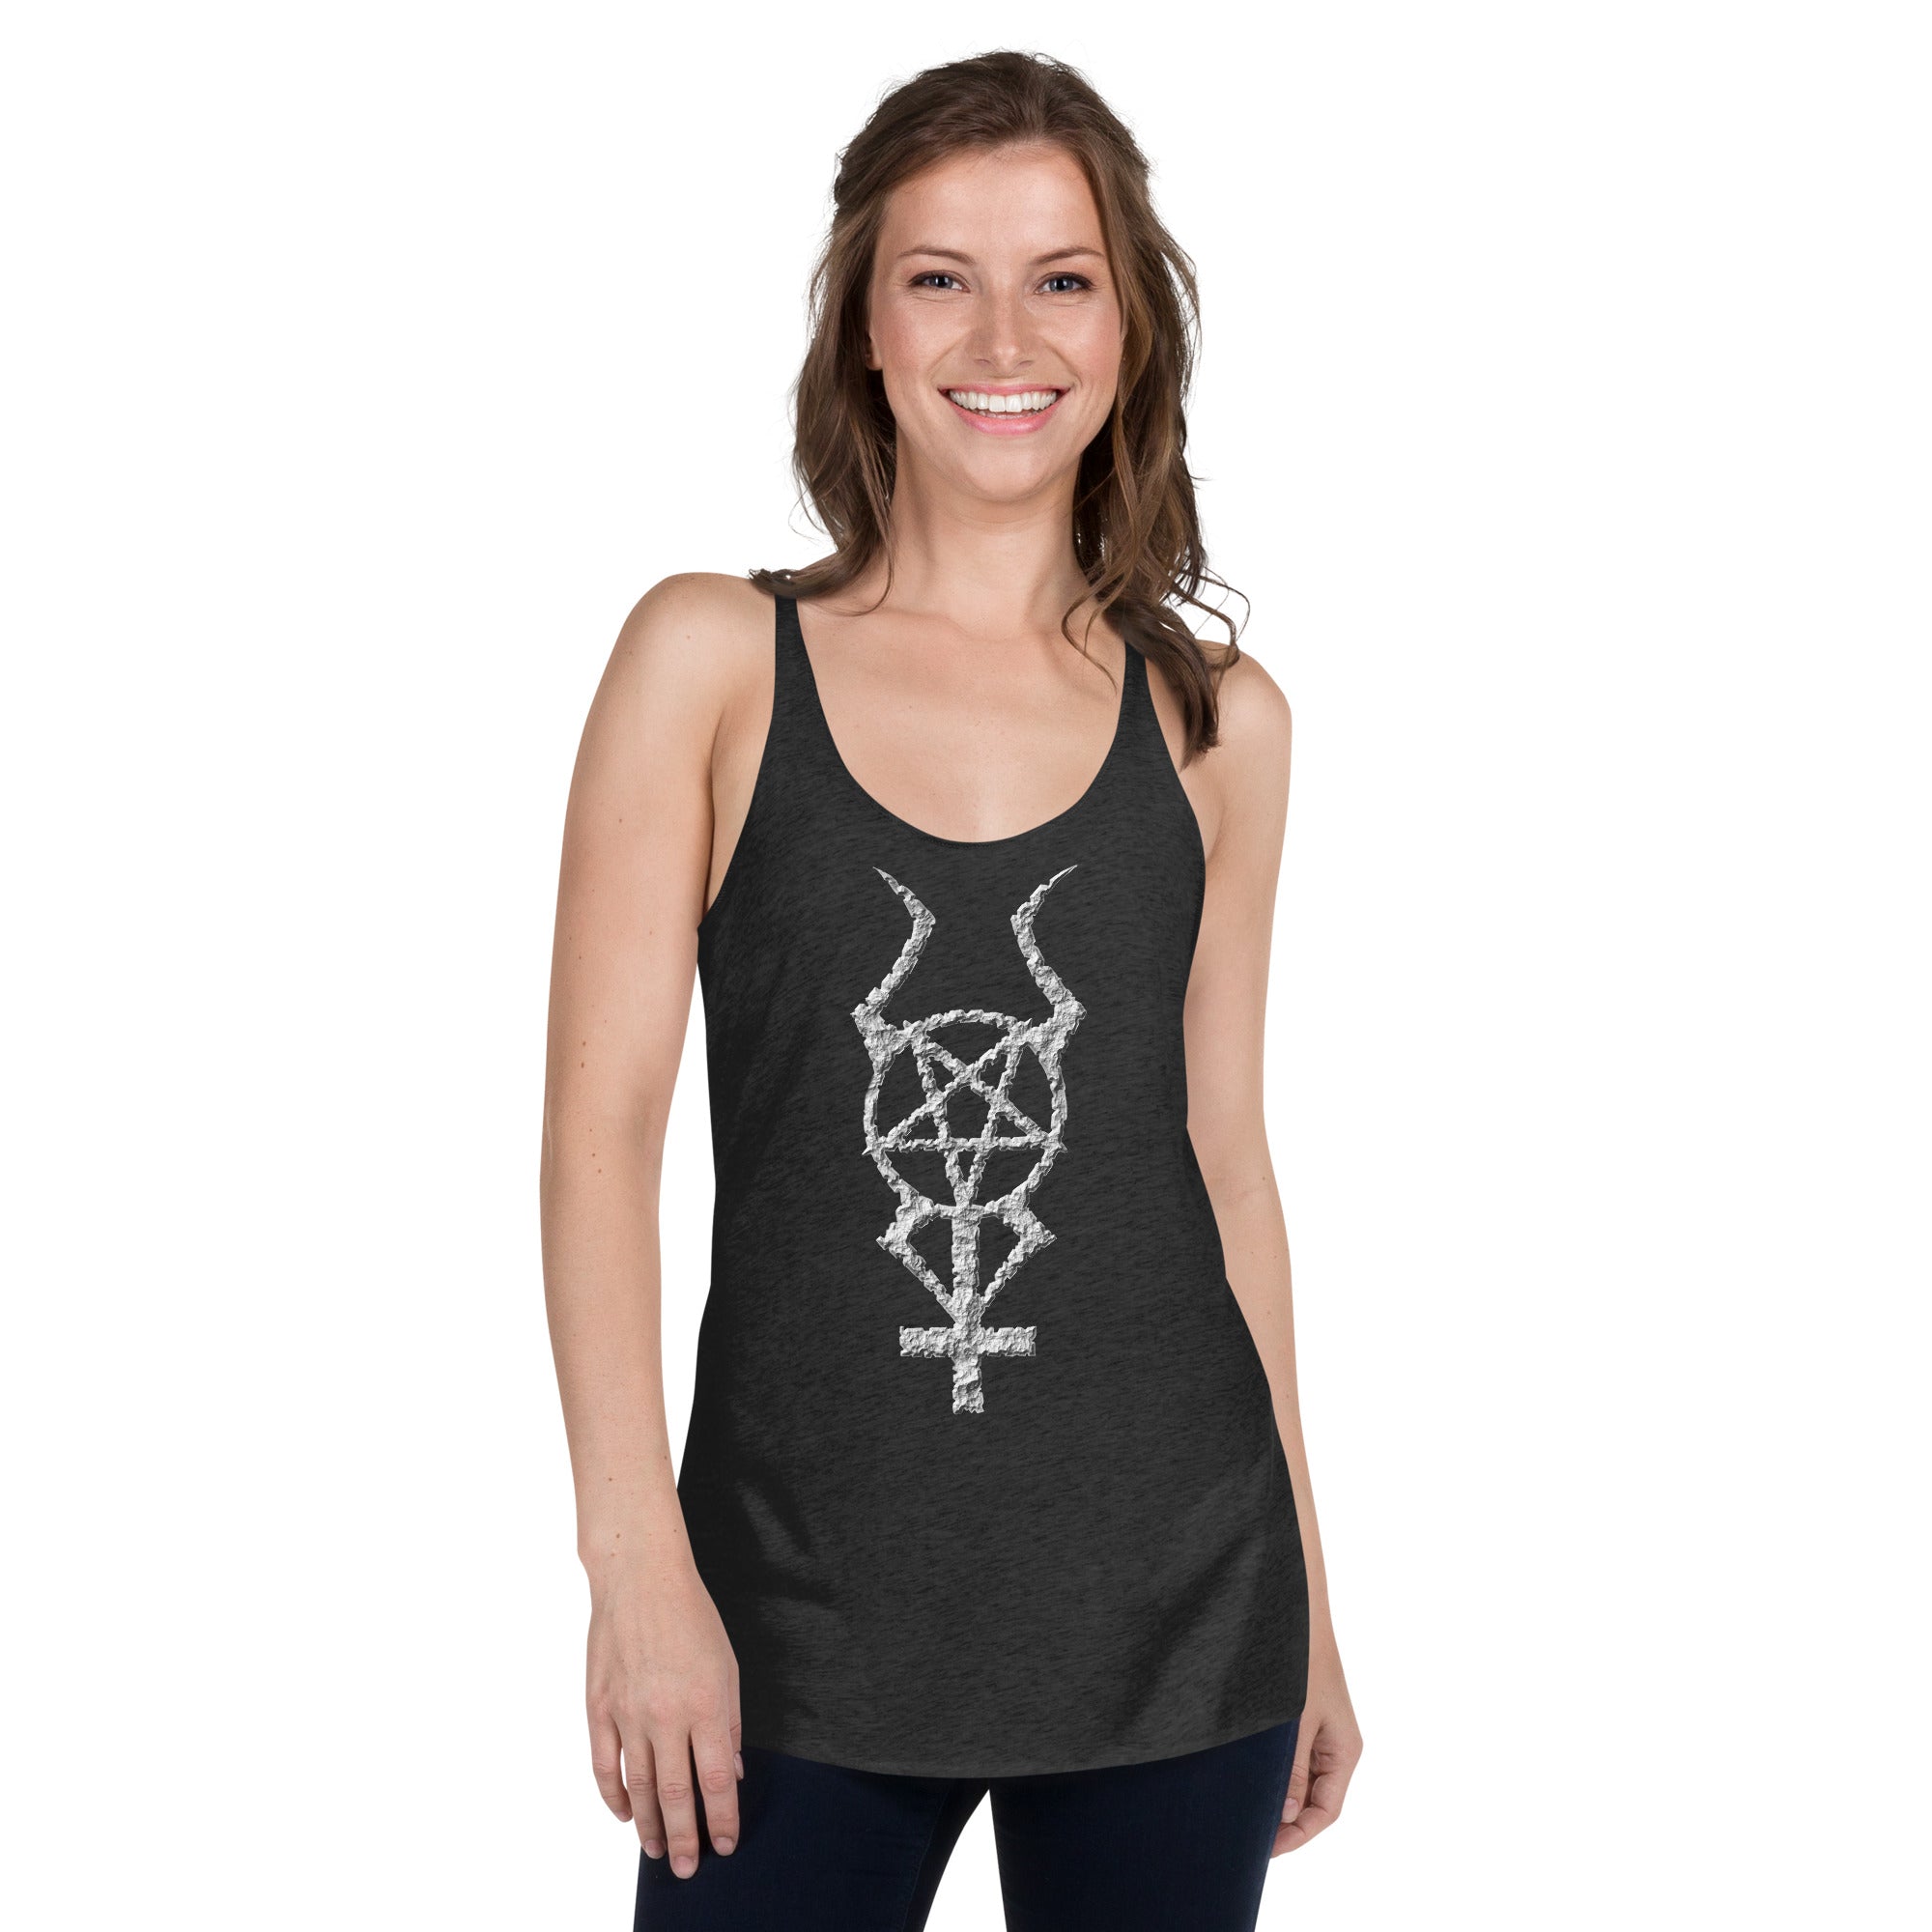 Ancient Stone Horned Pentacross Pentagram Cross Women's Racerback Tank Top Shirt - Edge of Life Designs